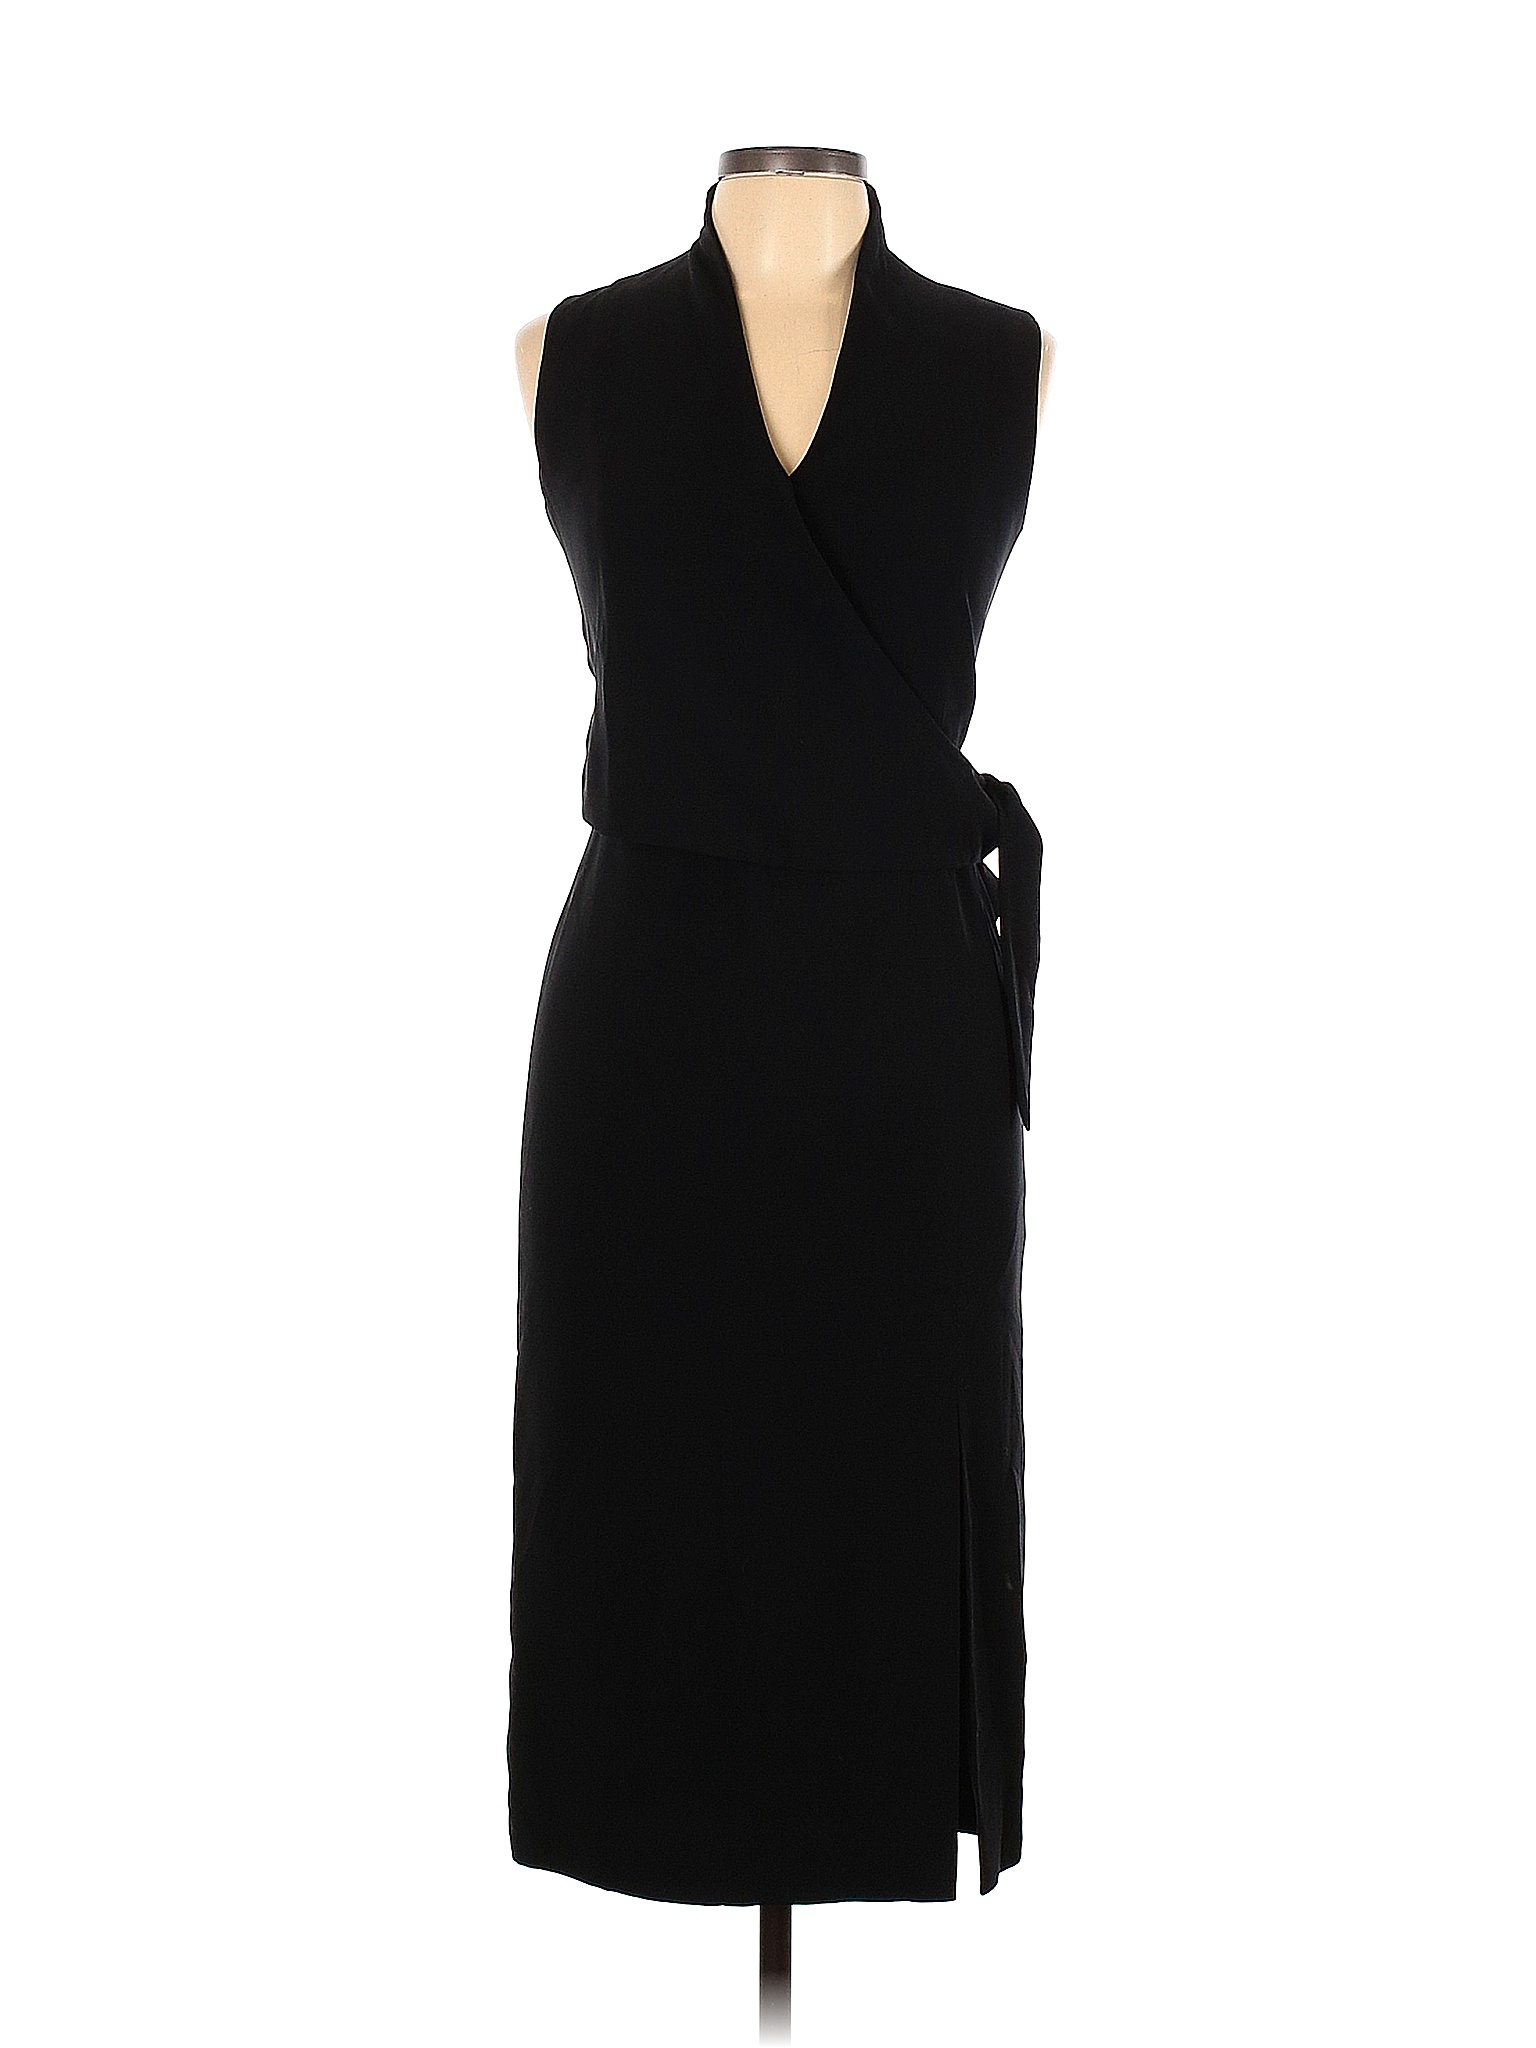 Jones New York 100% Polyester Solid Black Casual Dress Size 10 (Petite ...